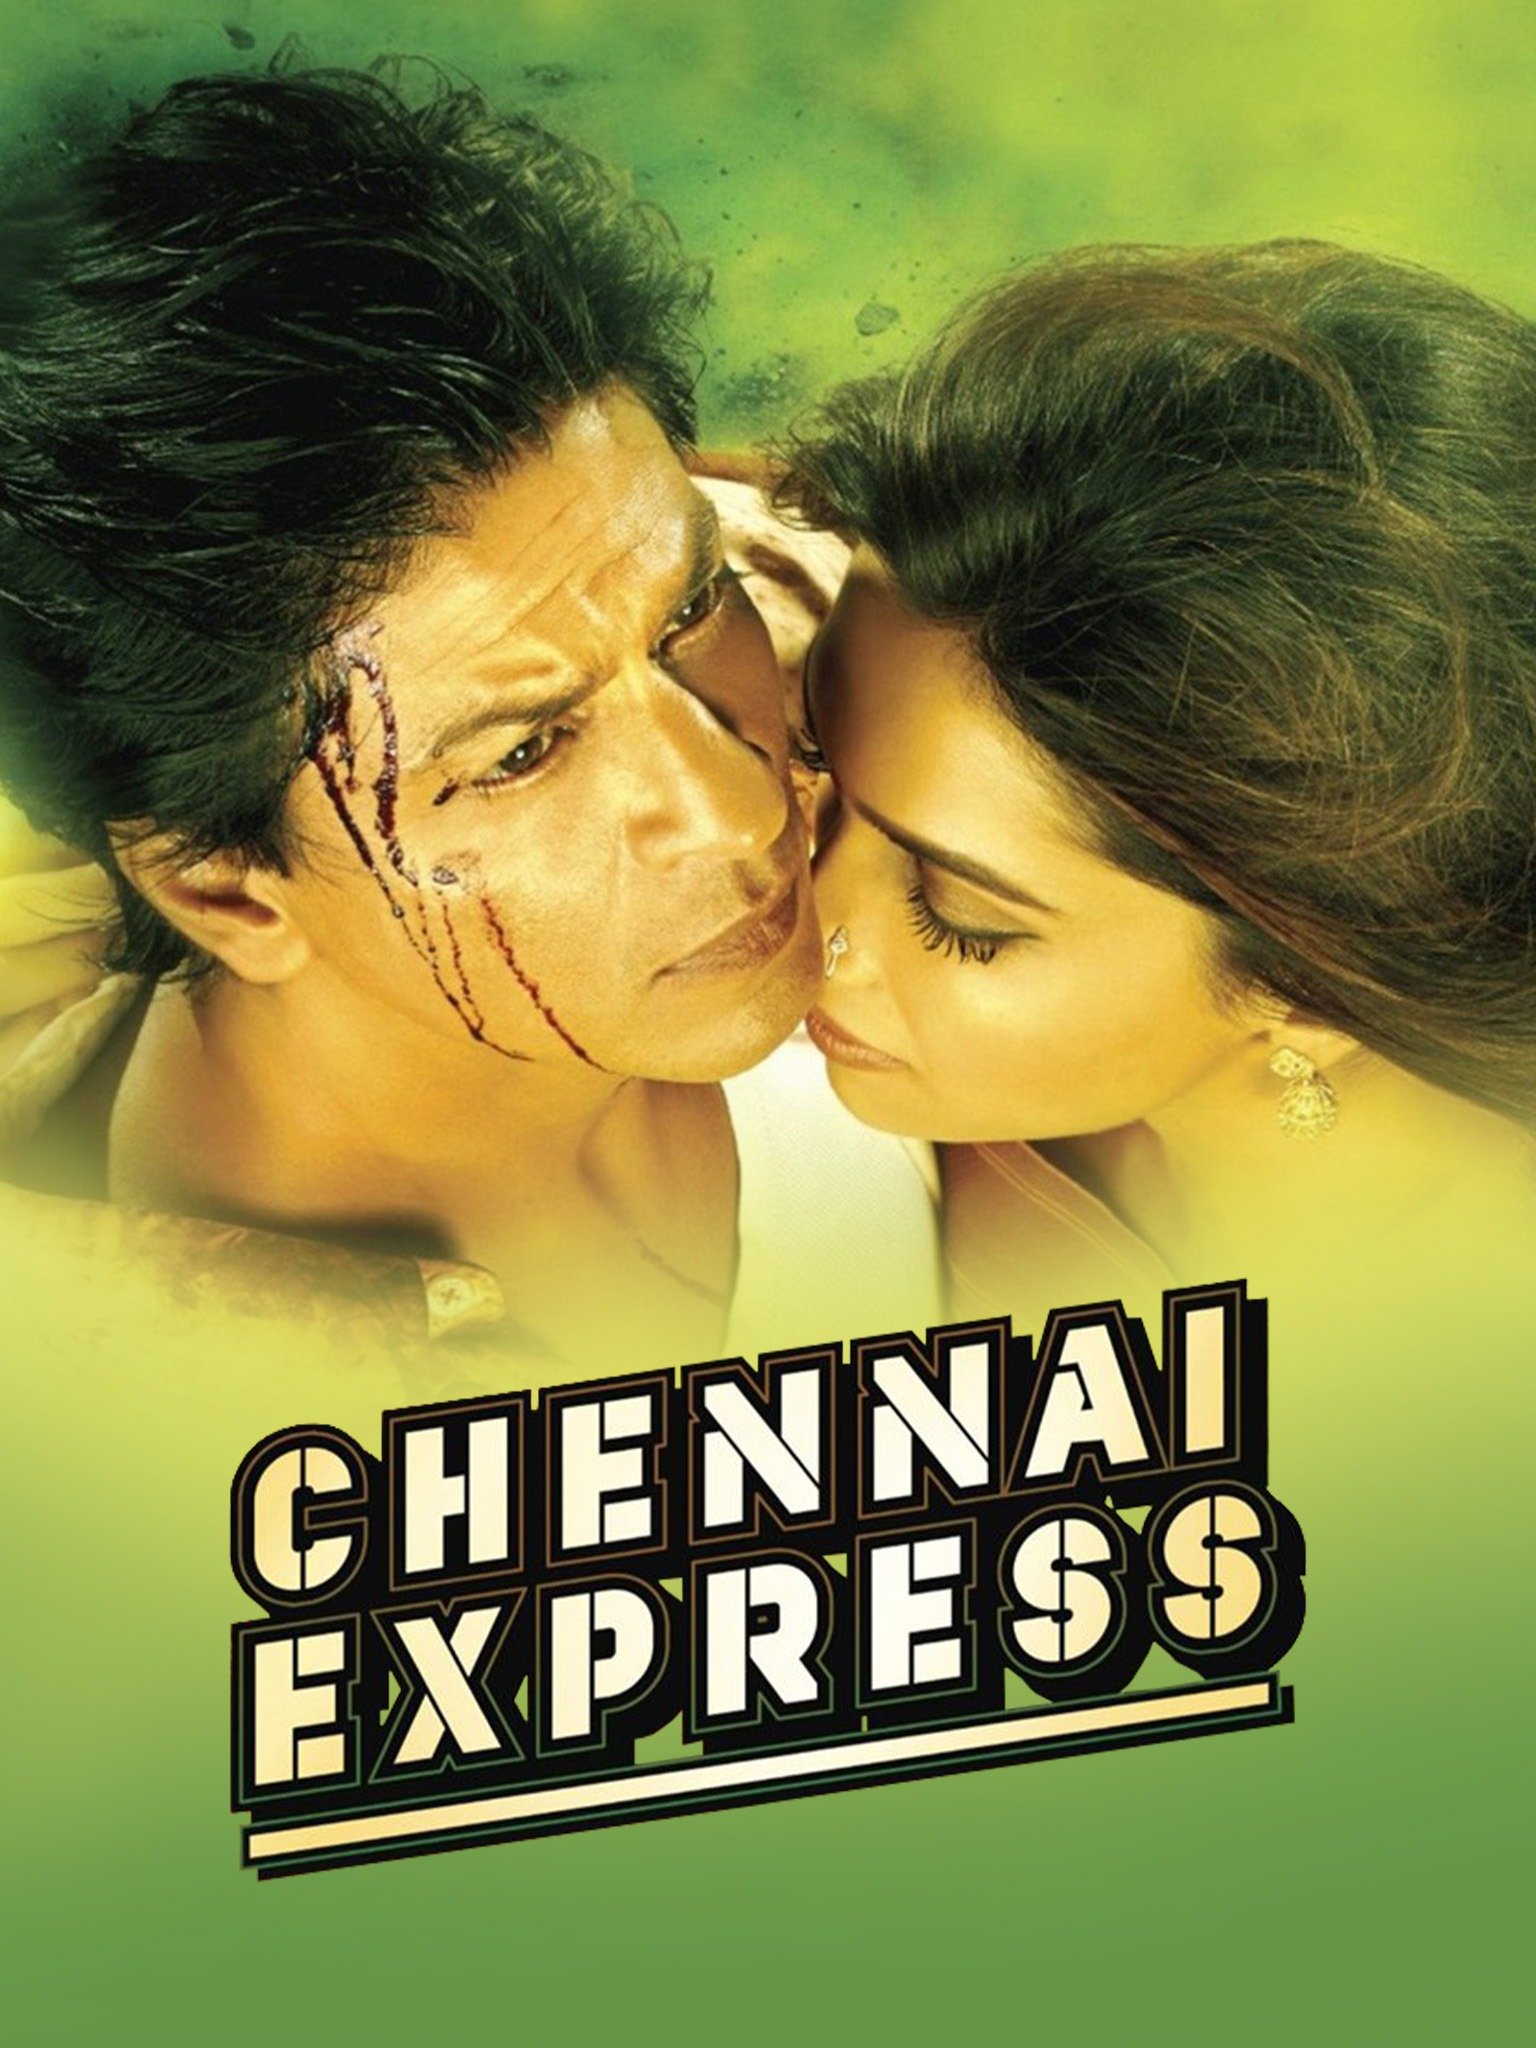 chennai express full movie hd free download 720p khatrimaza